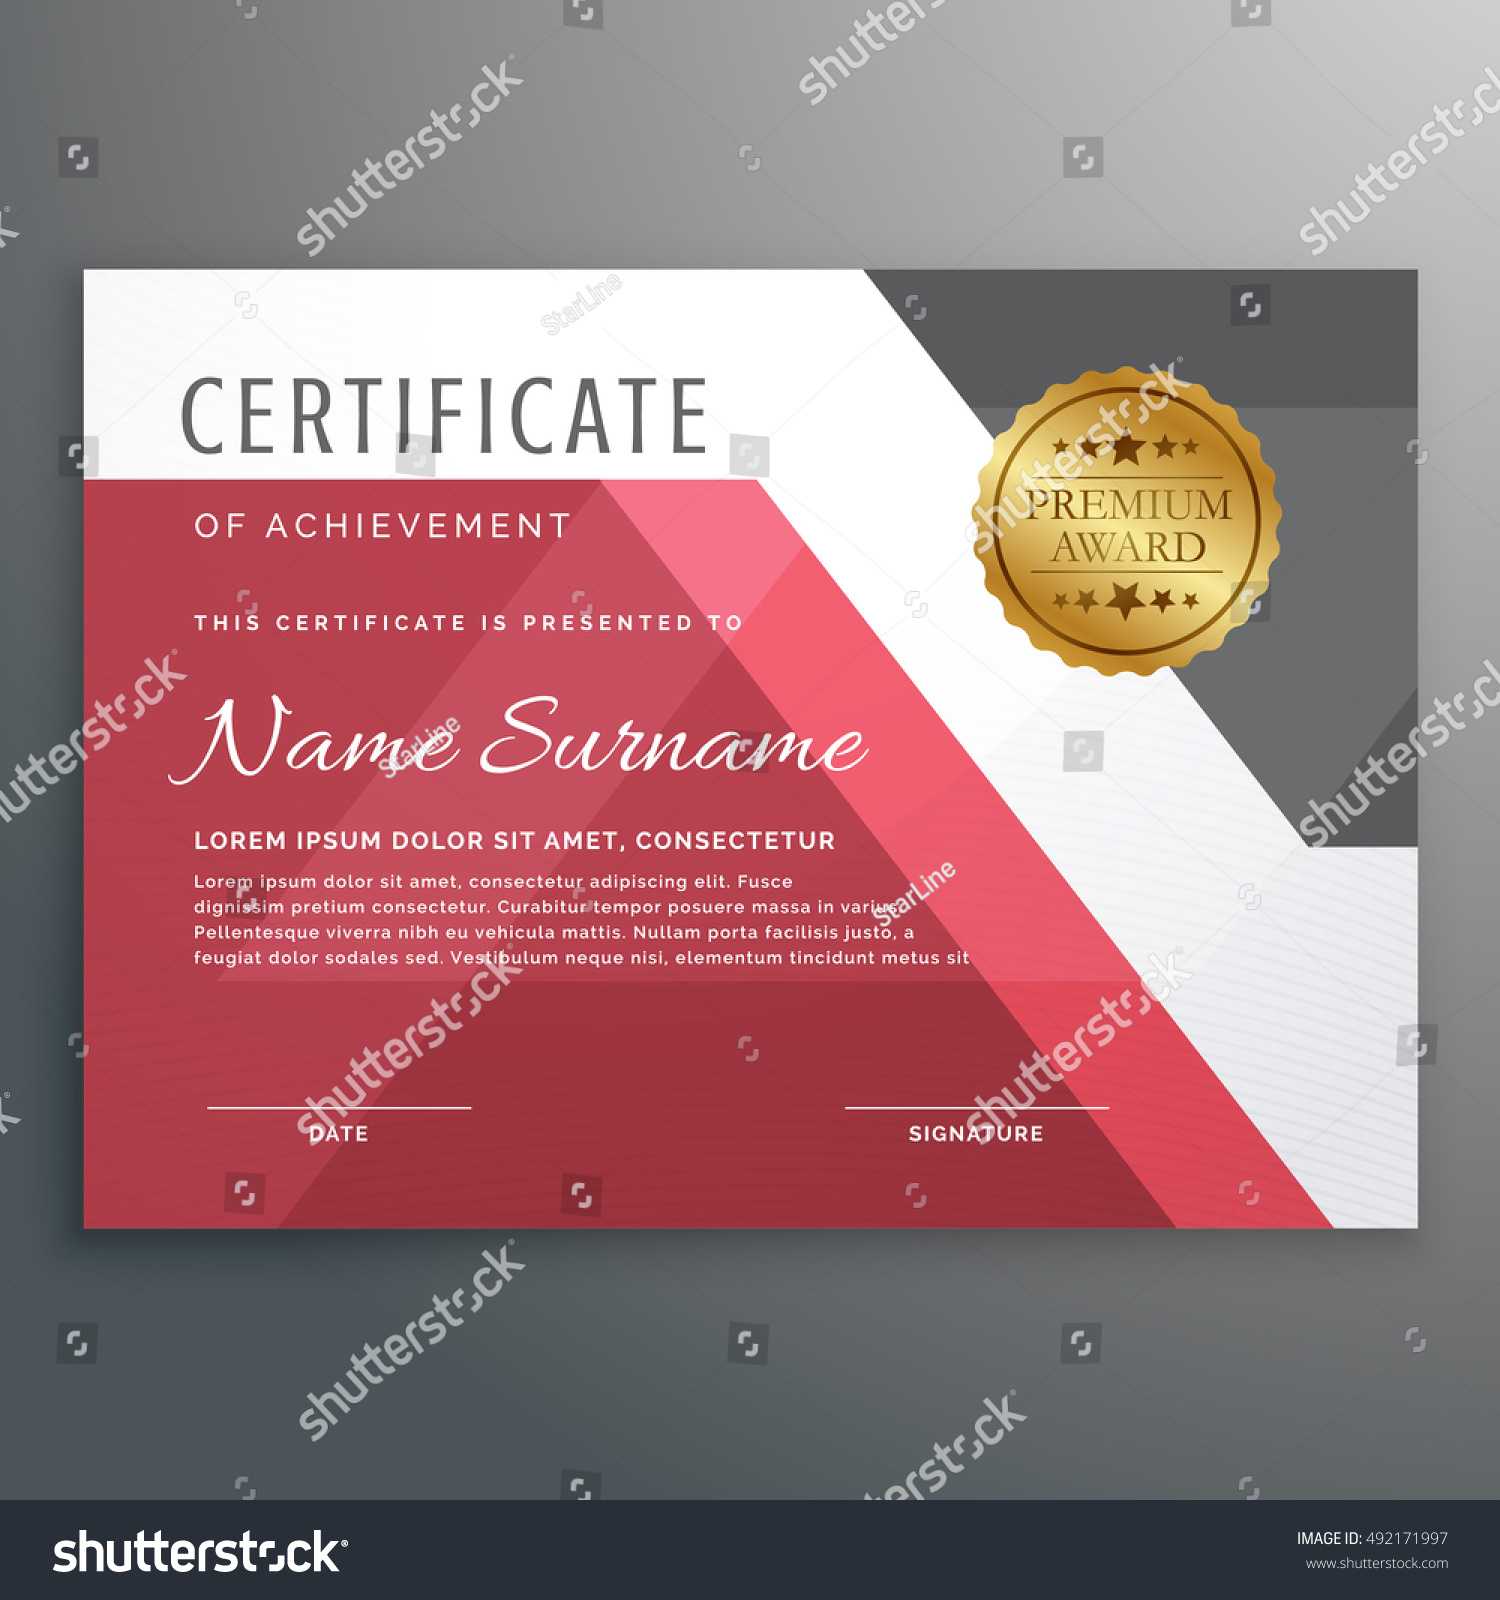 Elegant Certificate Template Geometric Shapes Stock Vector Inside Elegant Certificate Templates Free